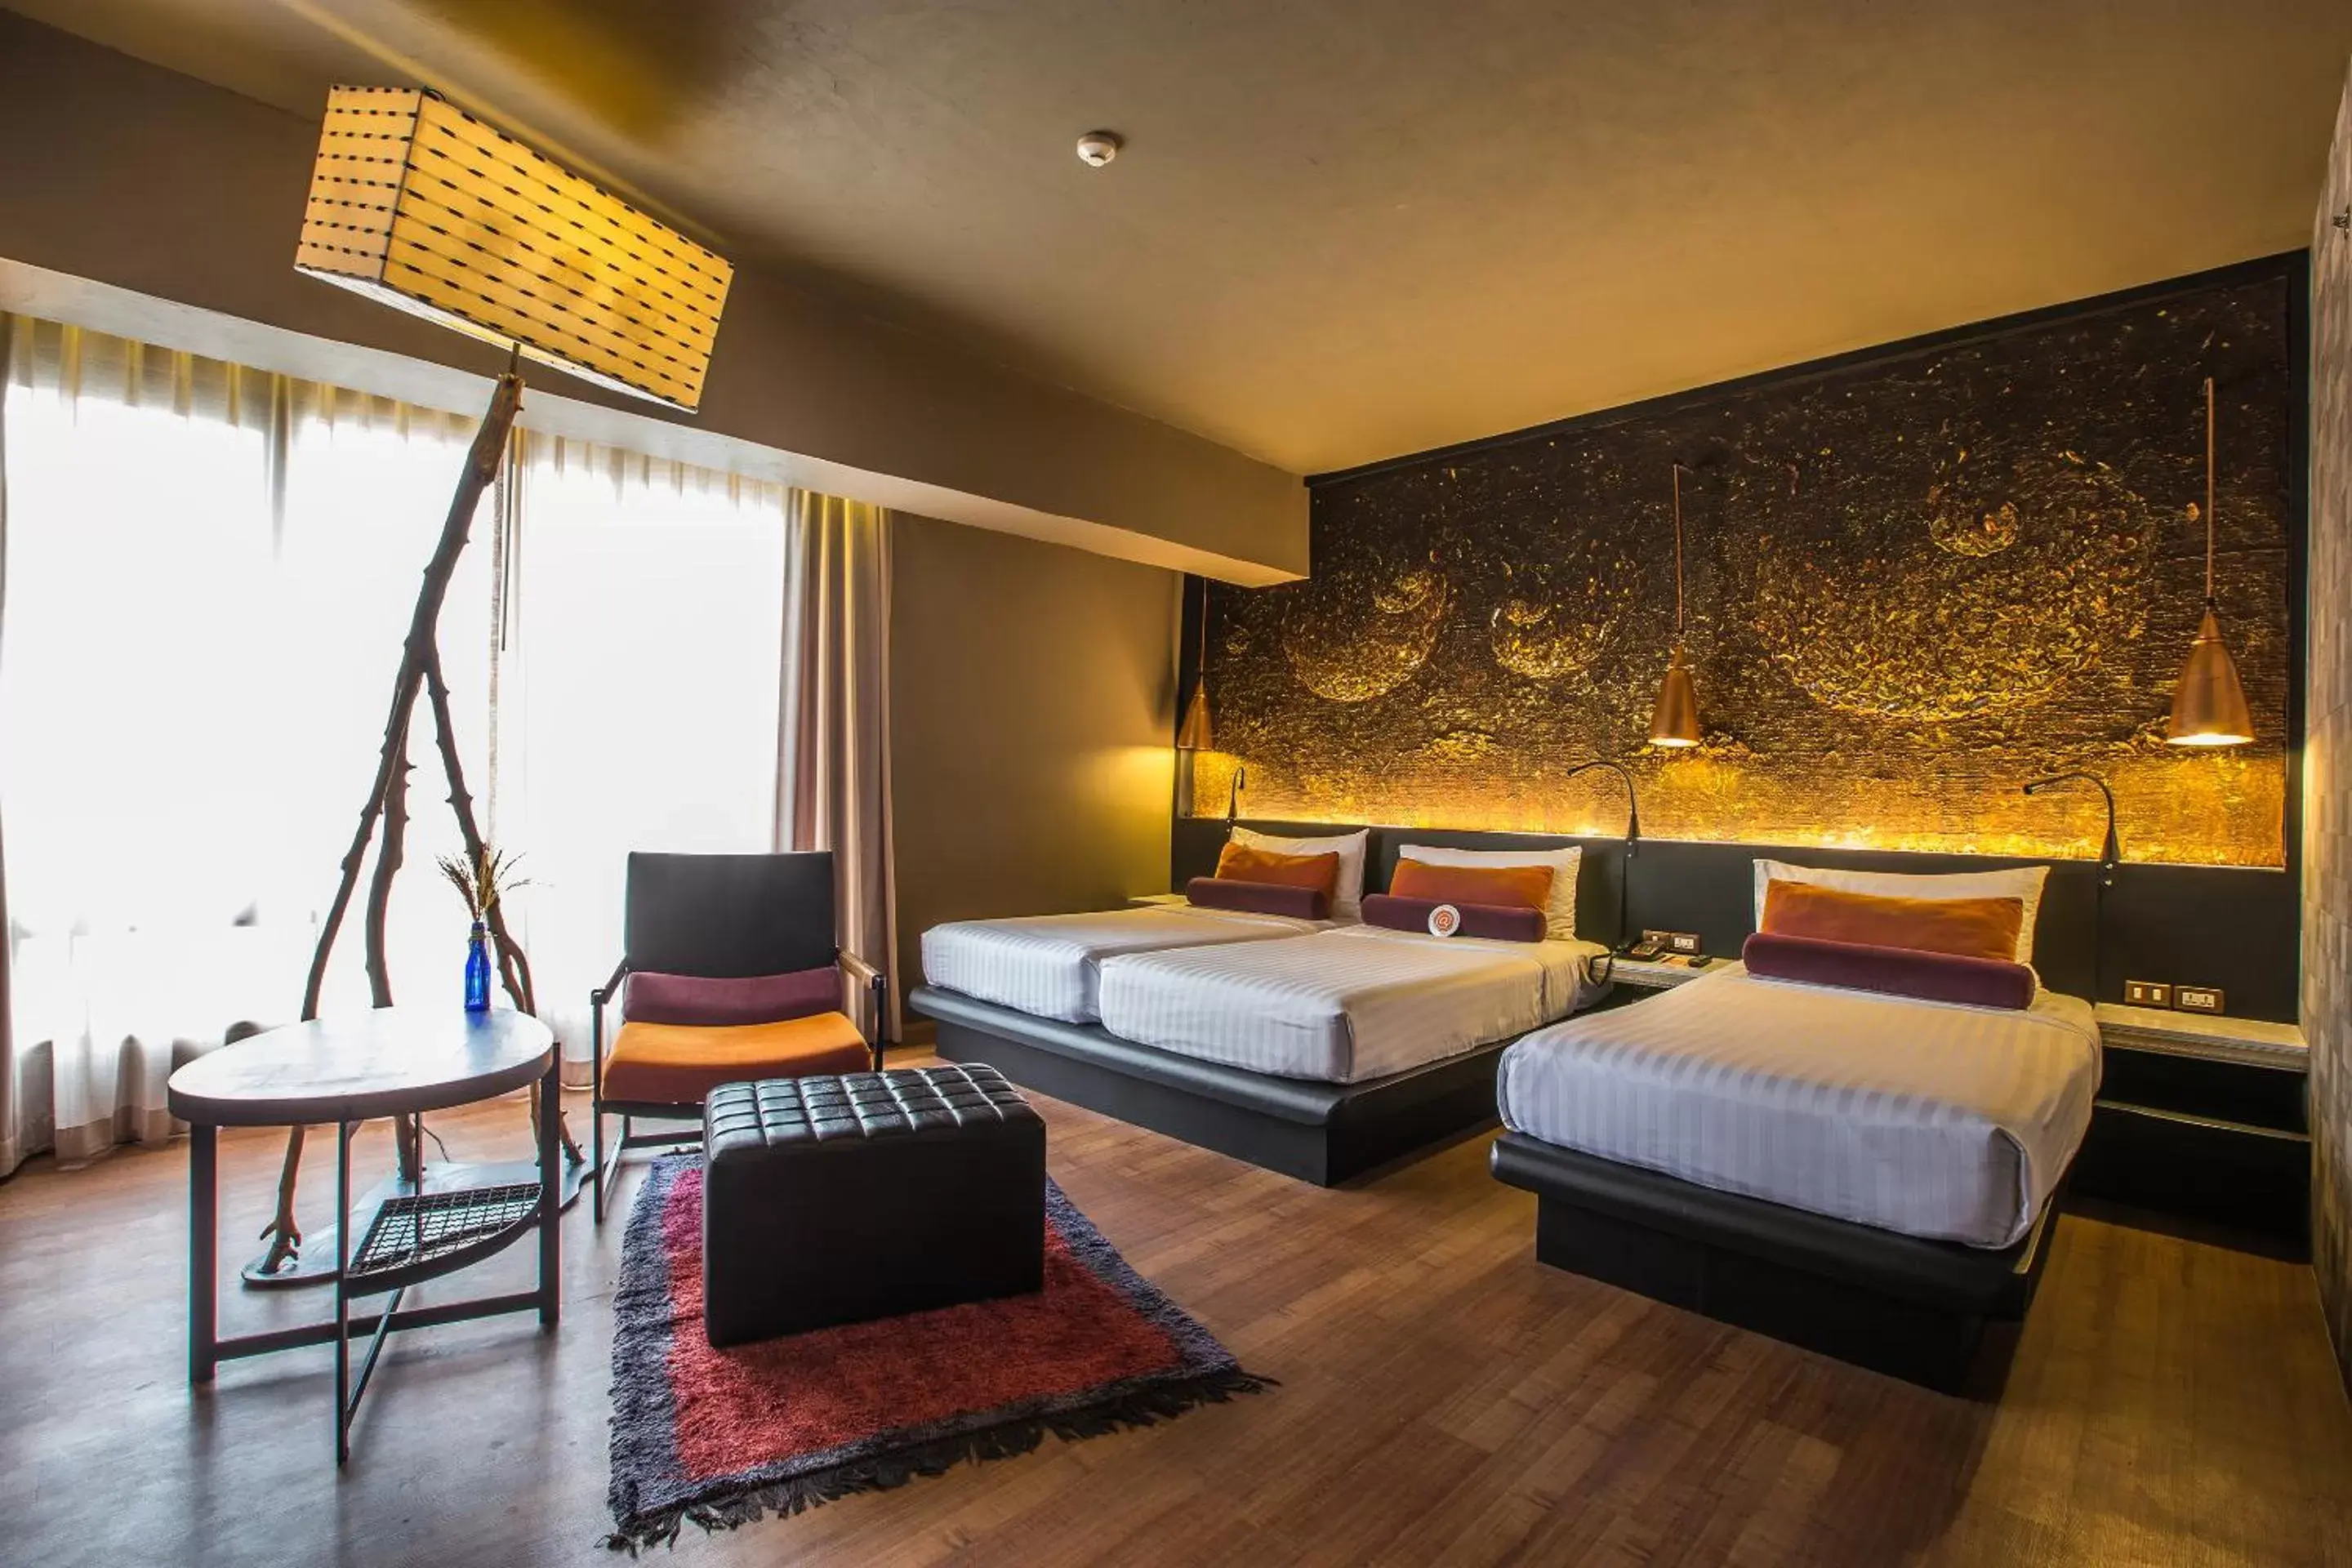 Bed, Room Photo in Siam@Siam, Design Hotel Bangkok